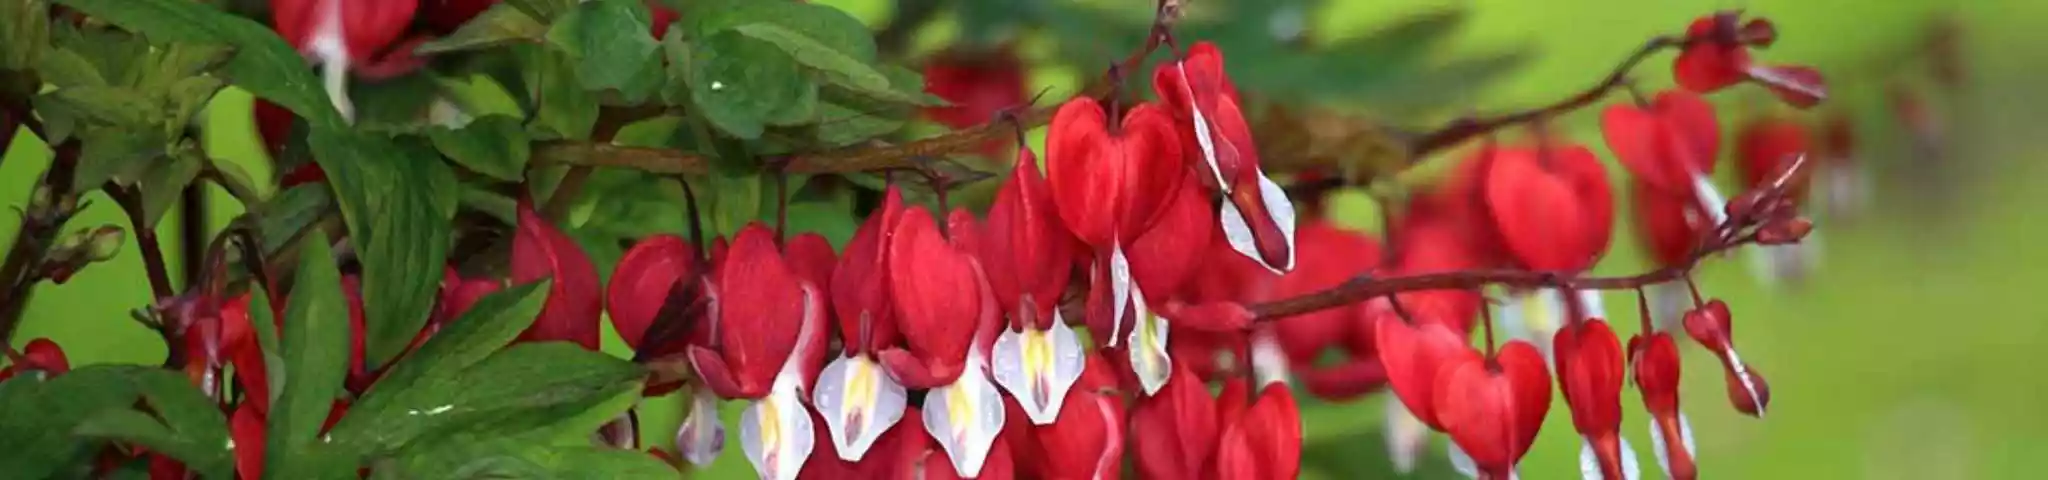 Bleeding Heart Flowers